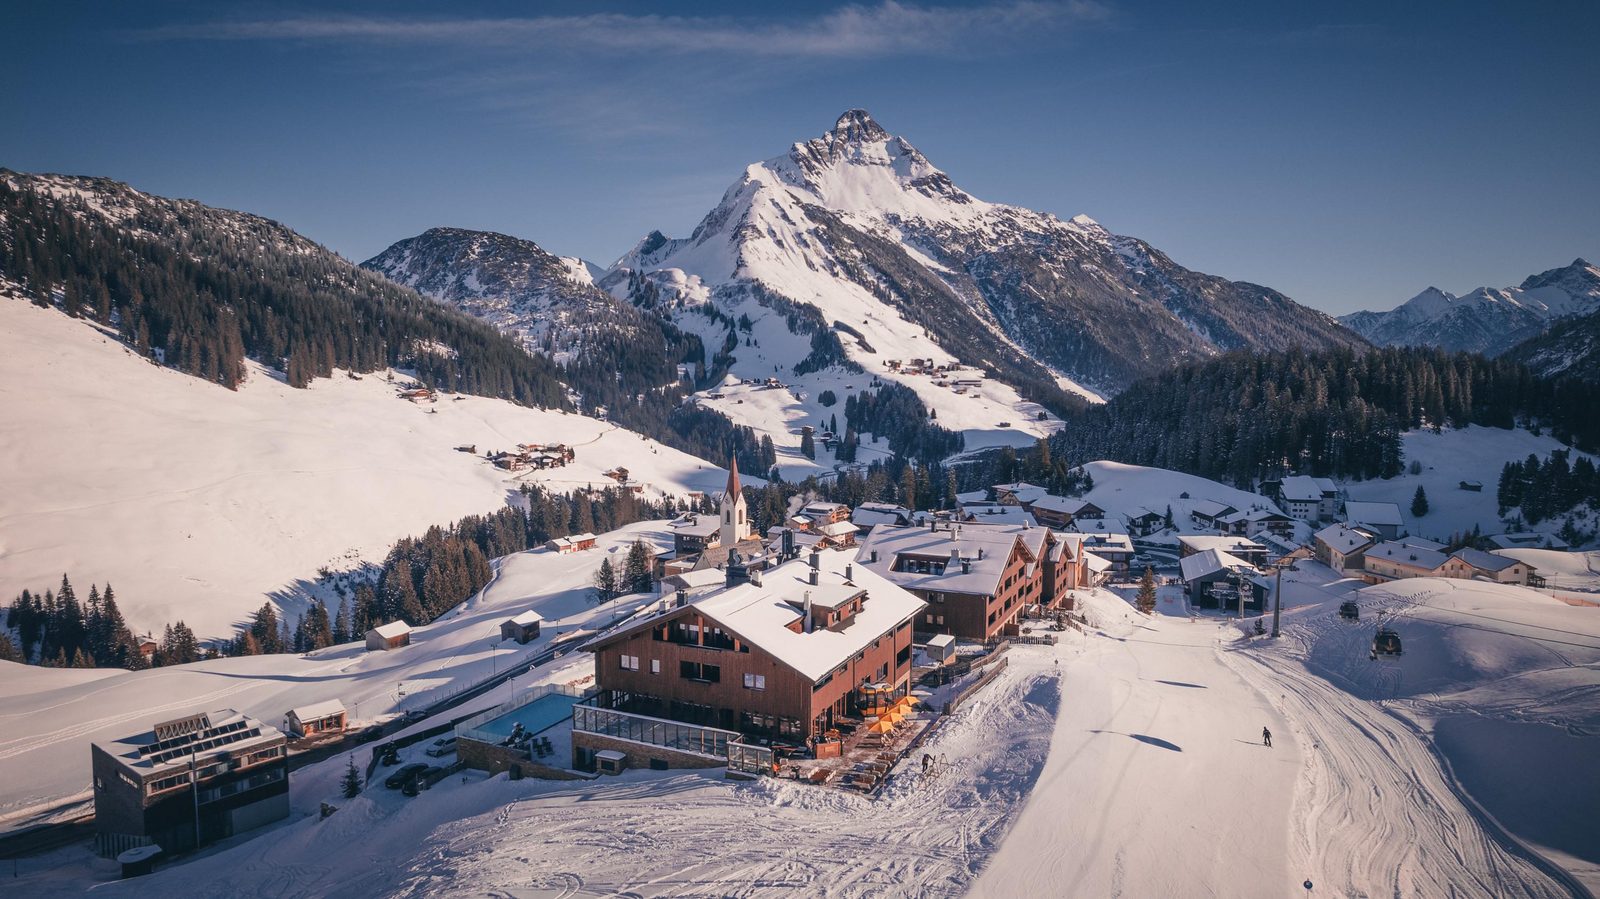 Winter in PURE Resort Warth-Arlberg